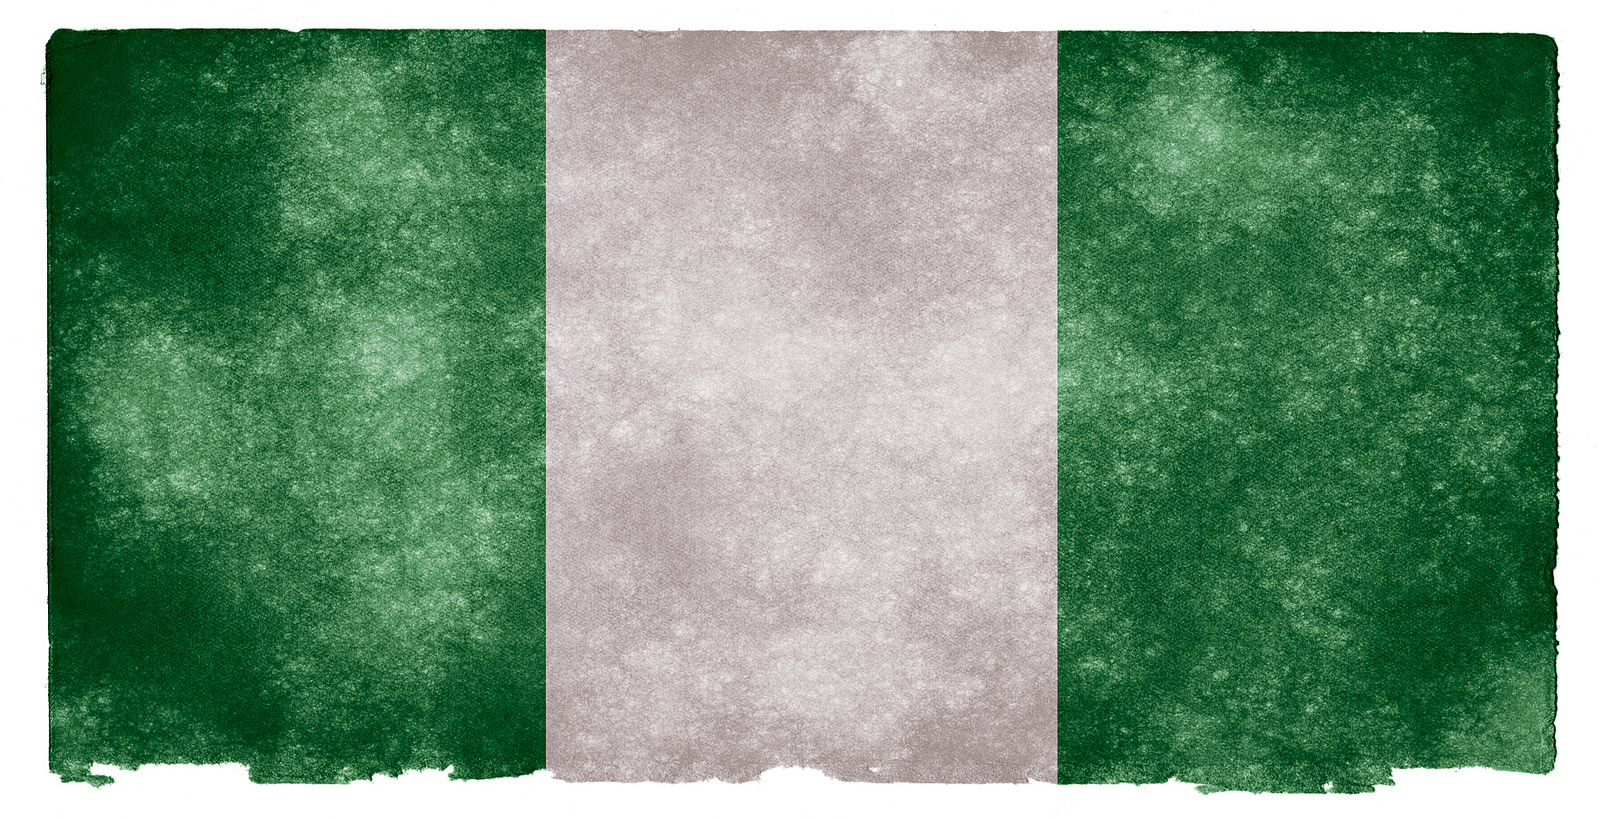 Nigeria: from recession toward sustainability